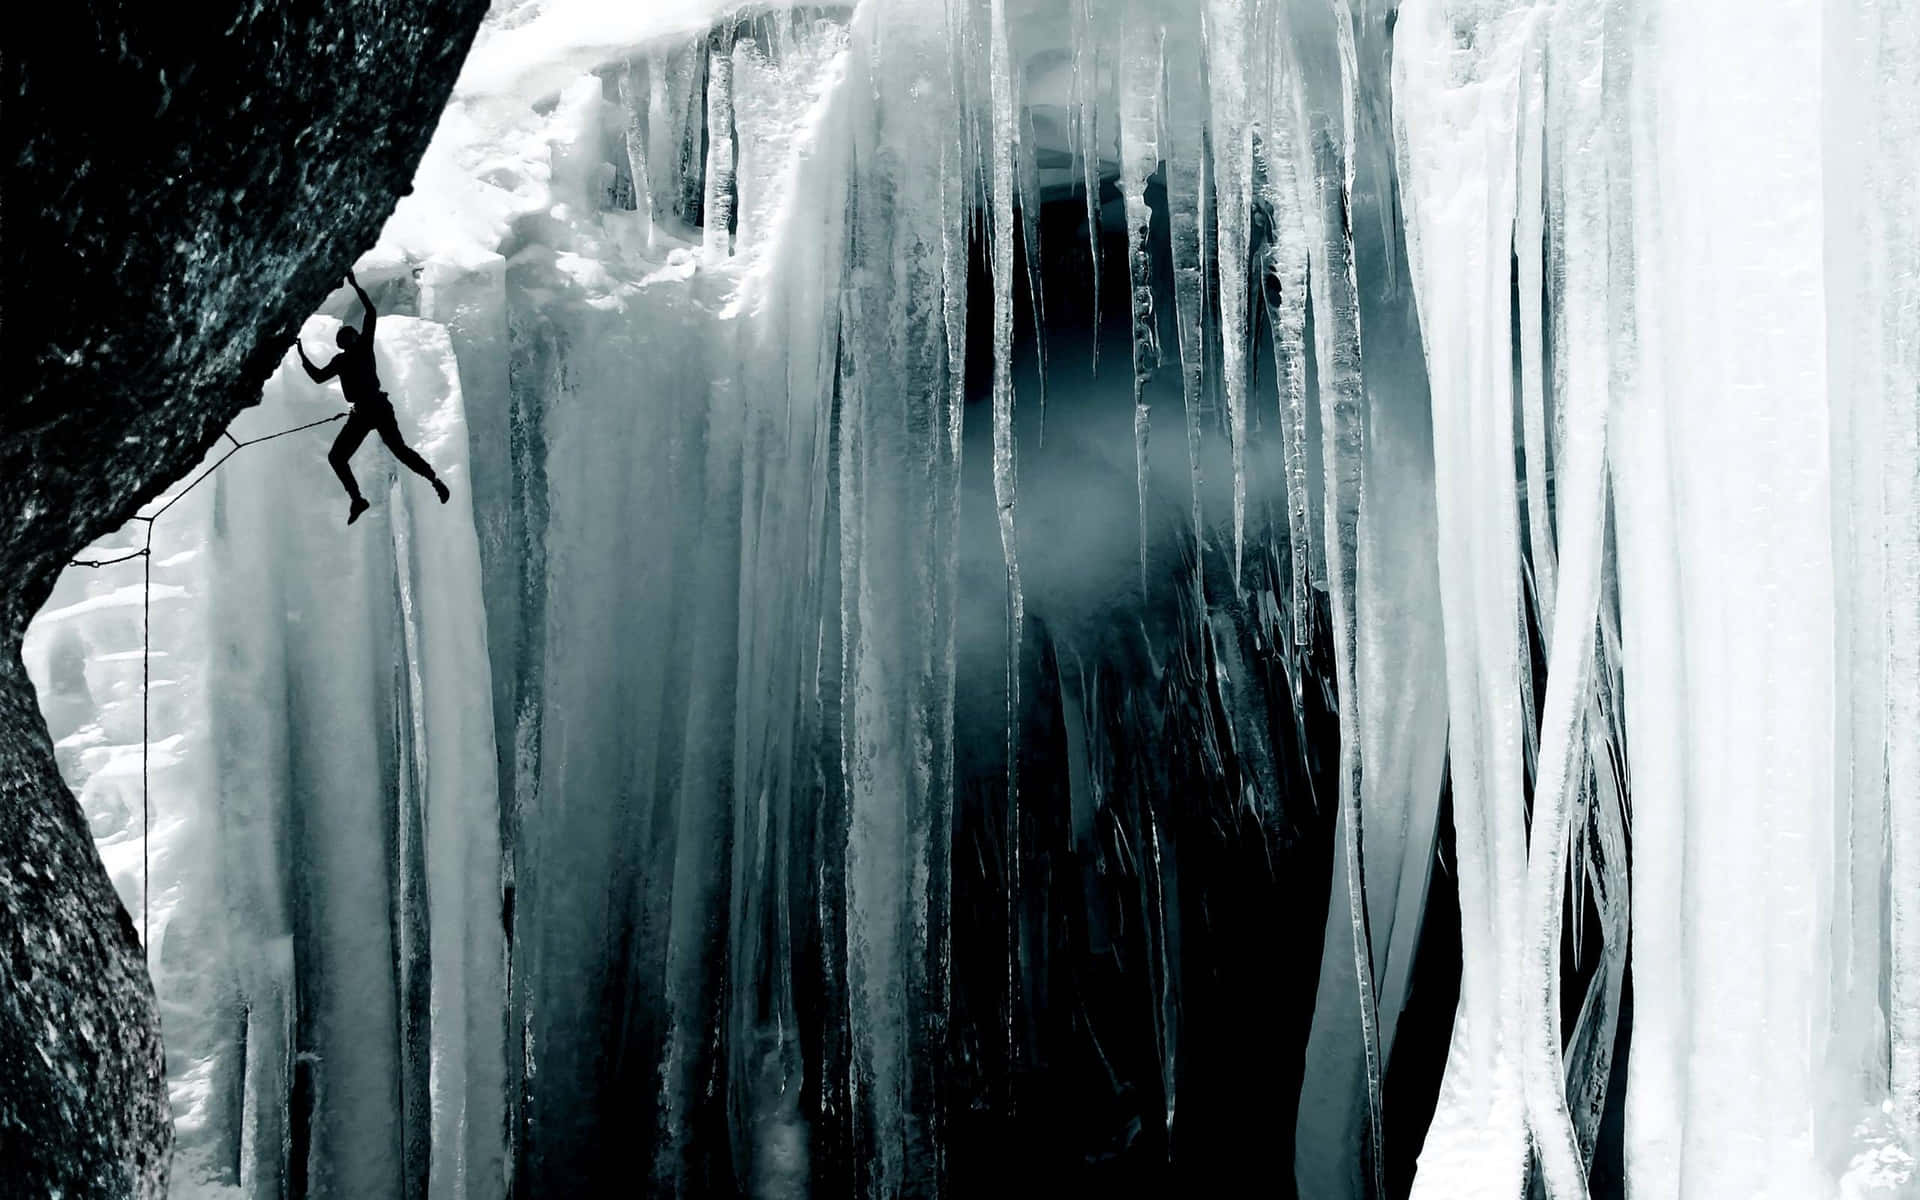 Ice Climber scaling impressive frozen waterfall Wallpaper